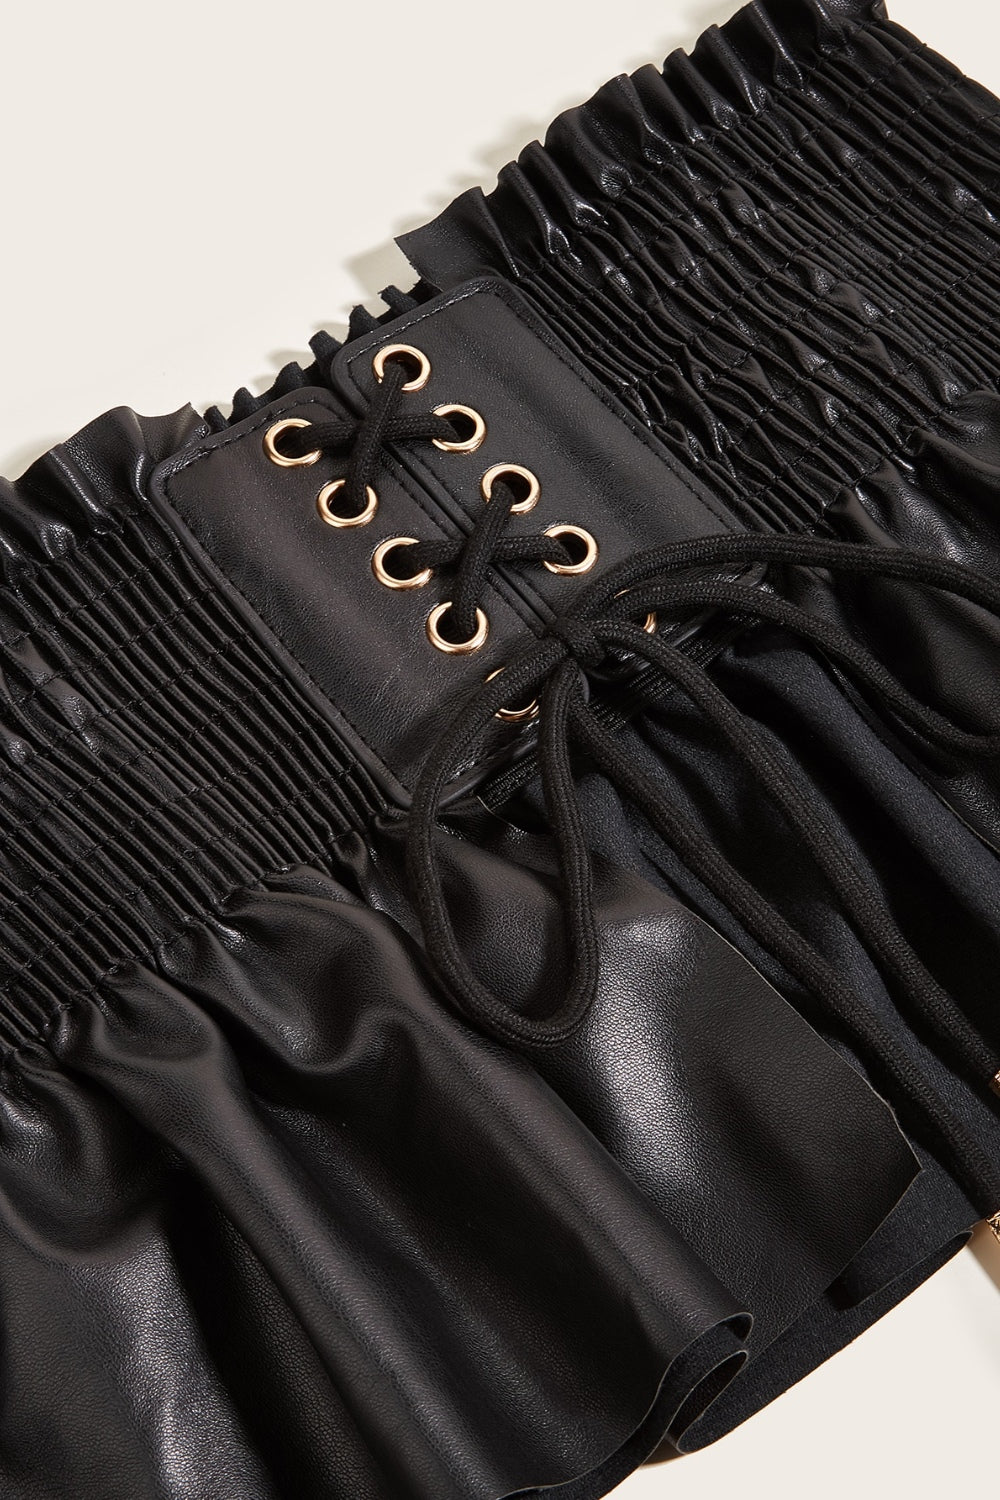 Smocked Lace-Up PU Leather Belt